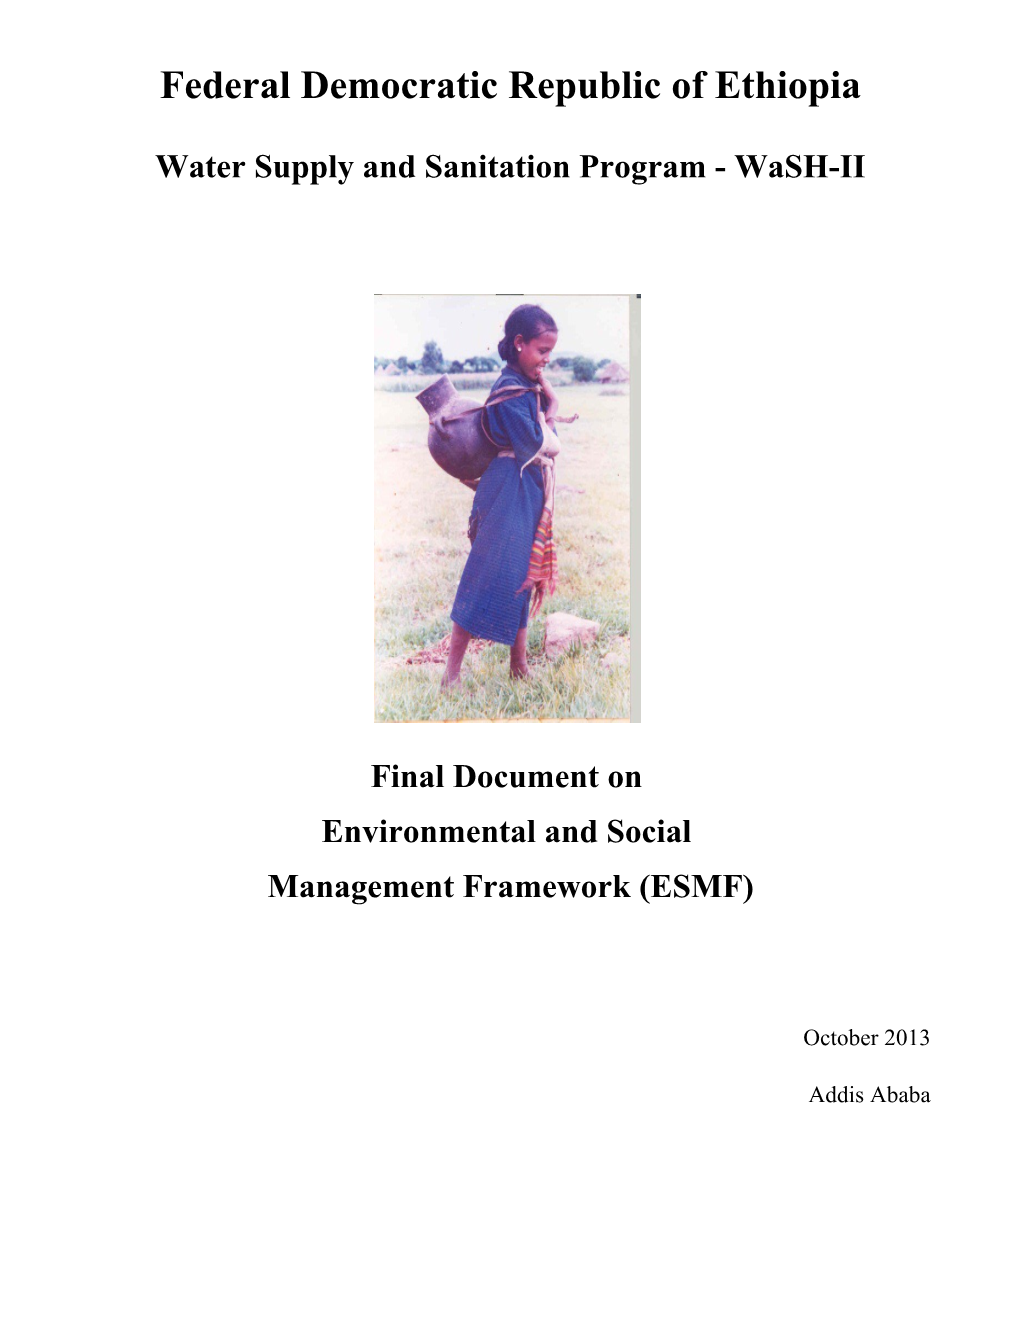 Wash-II Environmental and Social Management Framework